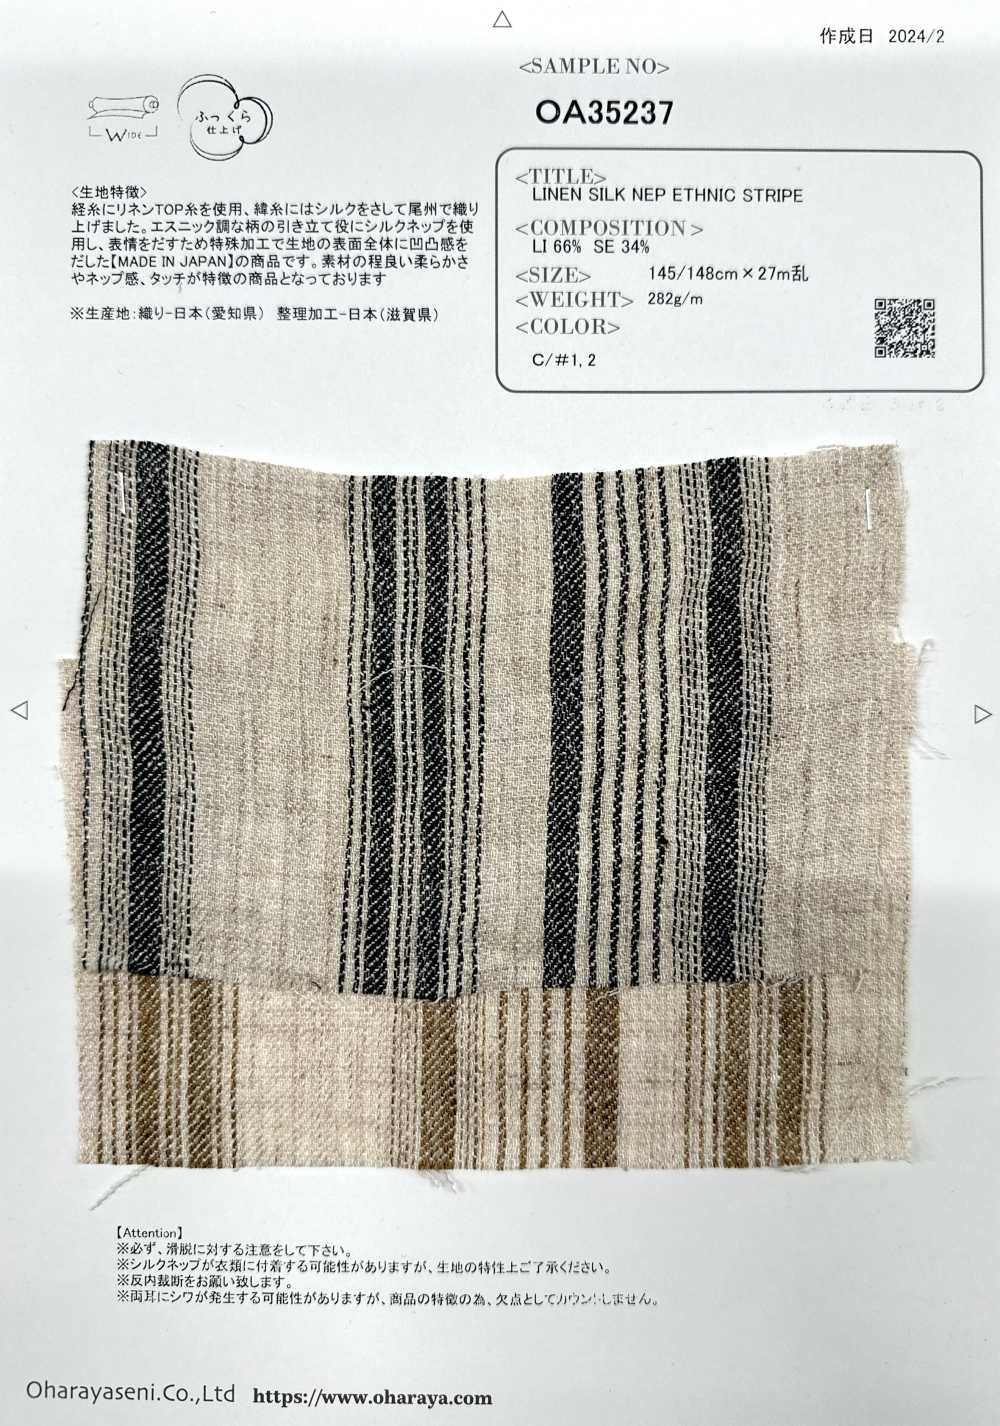 OA35237 Supima Cotton & French Linen × SILK 2/1 Super Twill Silky-Finish[원단] Oharayaseni